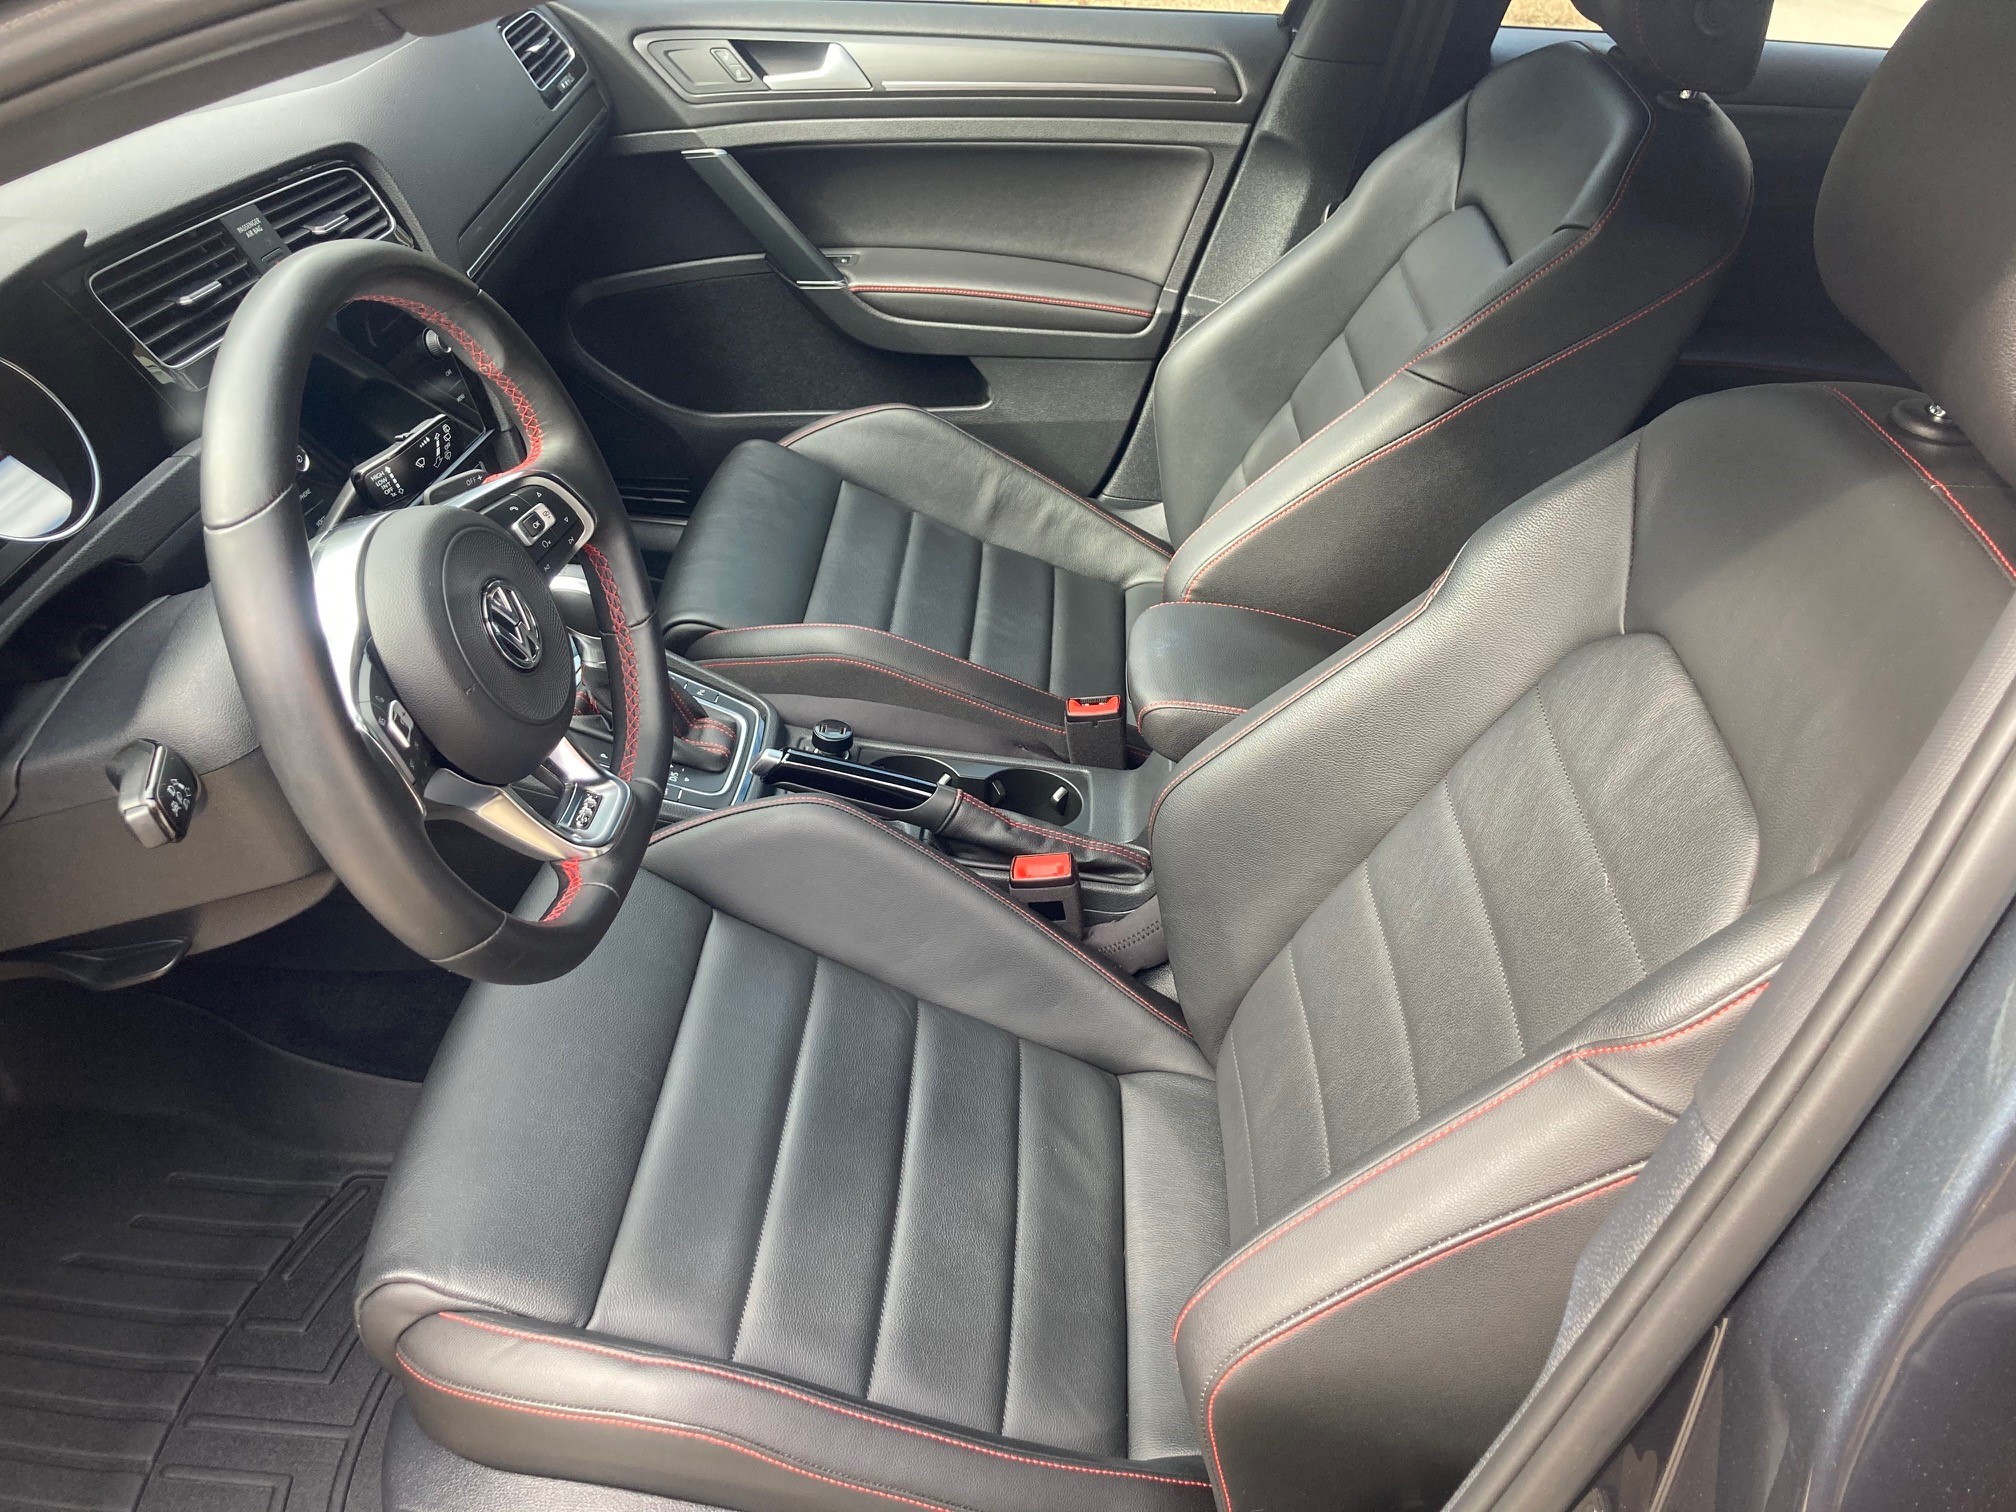 VW Interior Front Seats 2.jpg